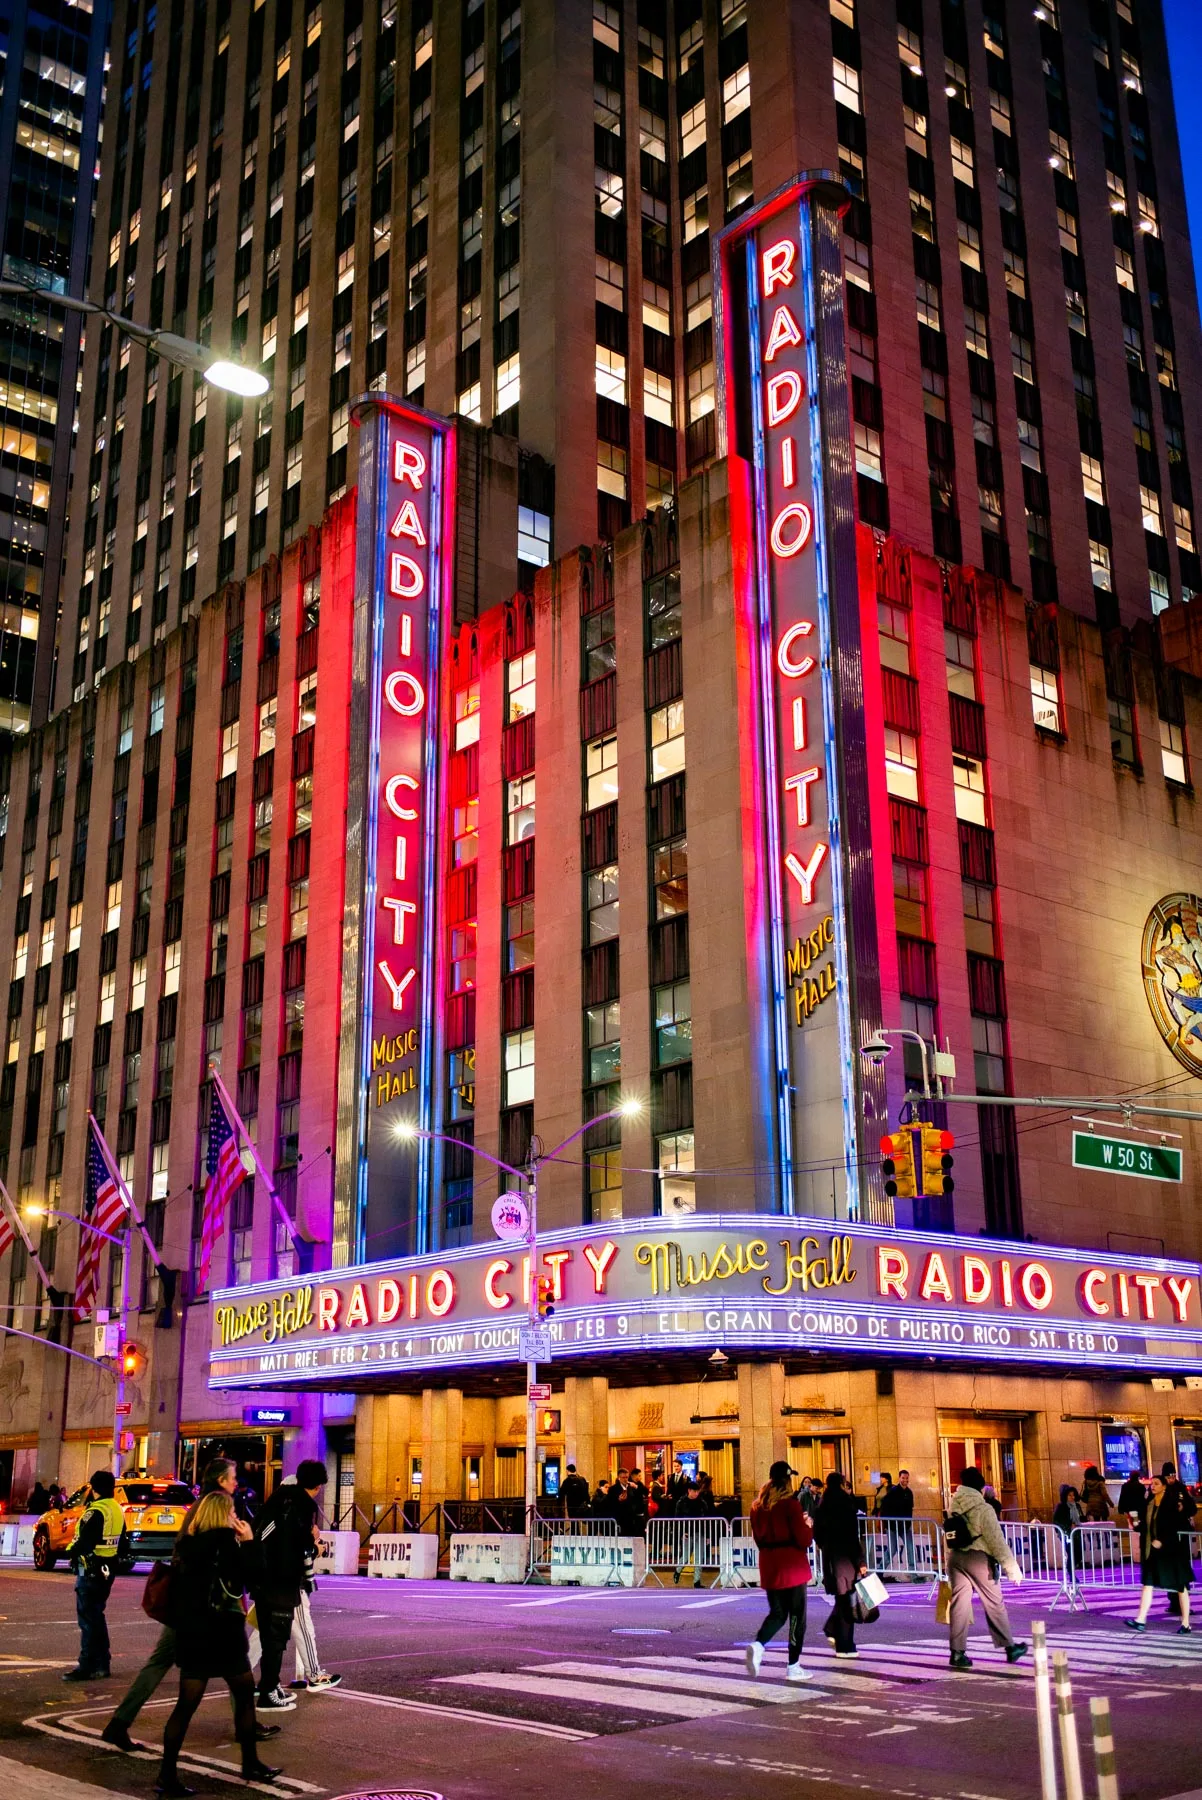 Radio City Hall in NYC at night